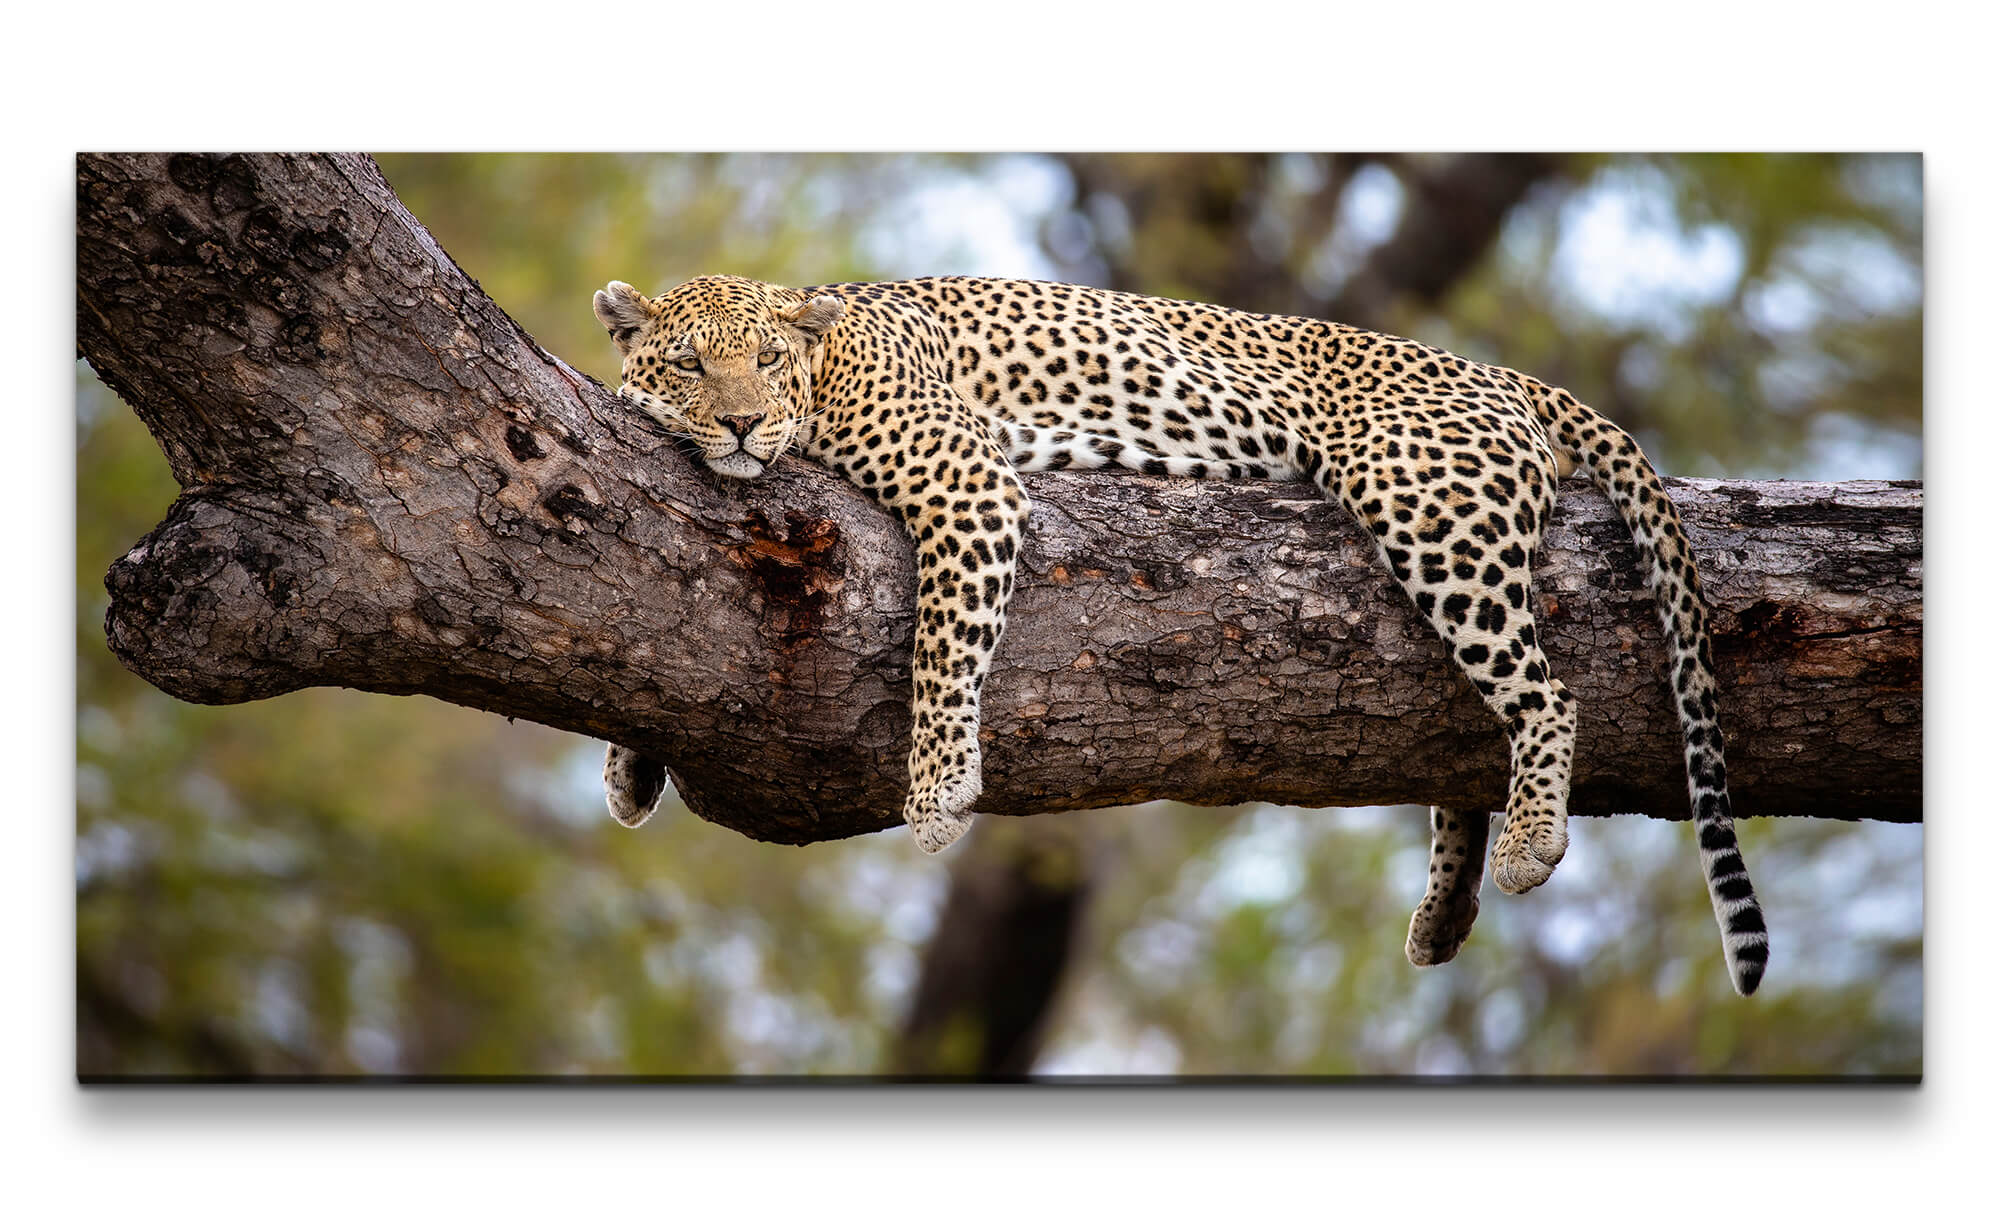 Leinwandbild 120x60cm Leopard döst im Baum Raubkatze Großkatze Wildnis  Afrika | Sinus Art GmbH - Einzigartige Designs, Geschenke , Wandbilder &  Wohnaccessoires zu fairen Preisen